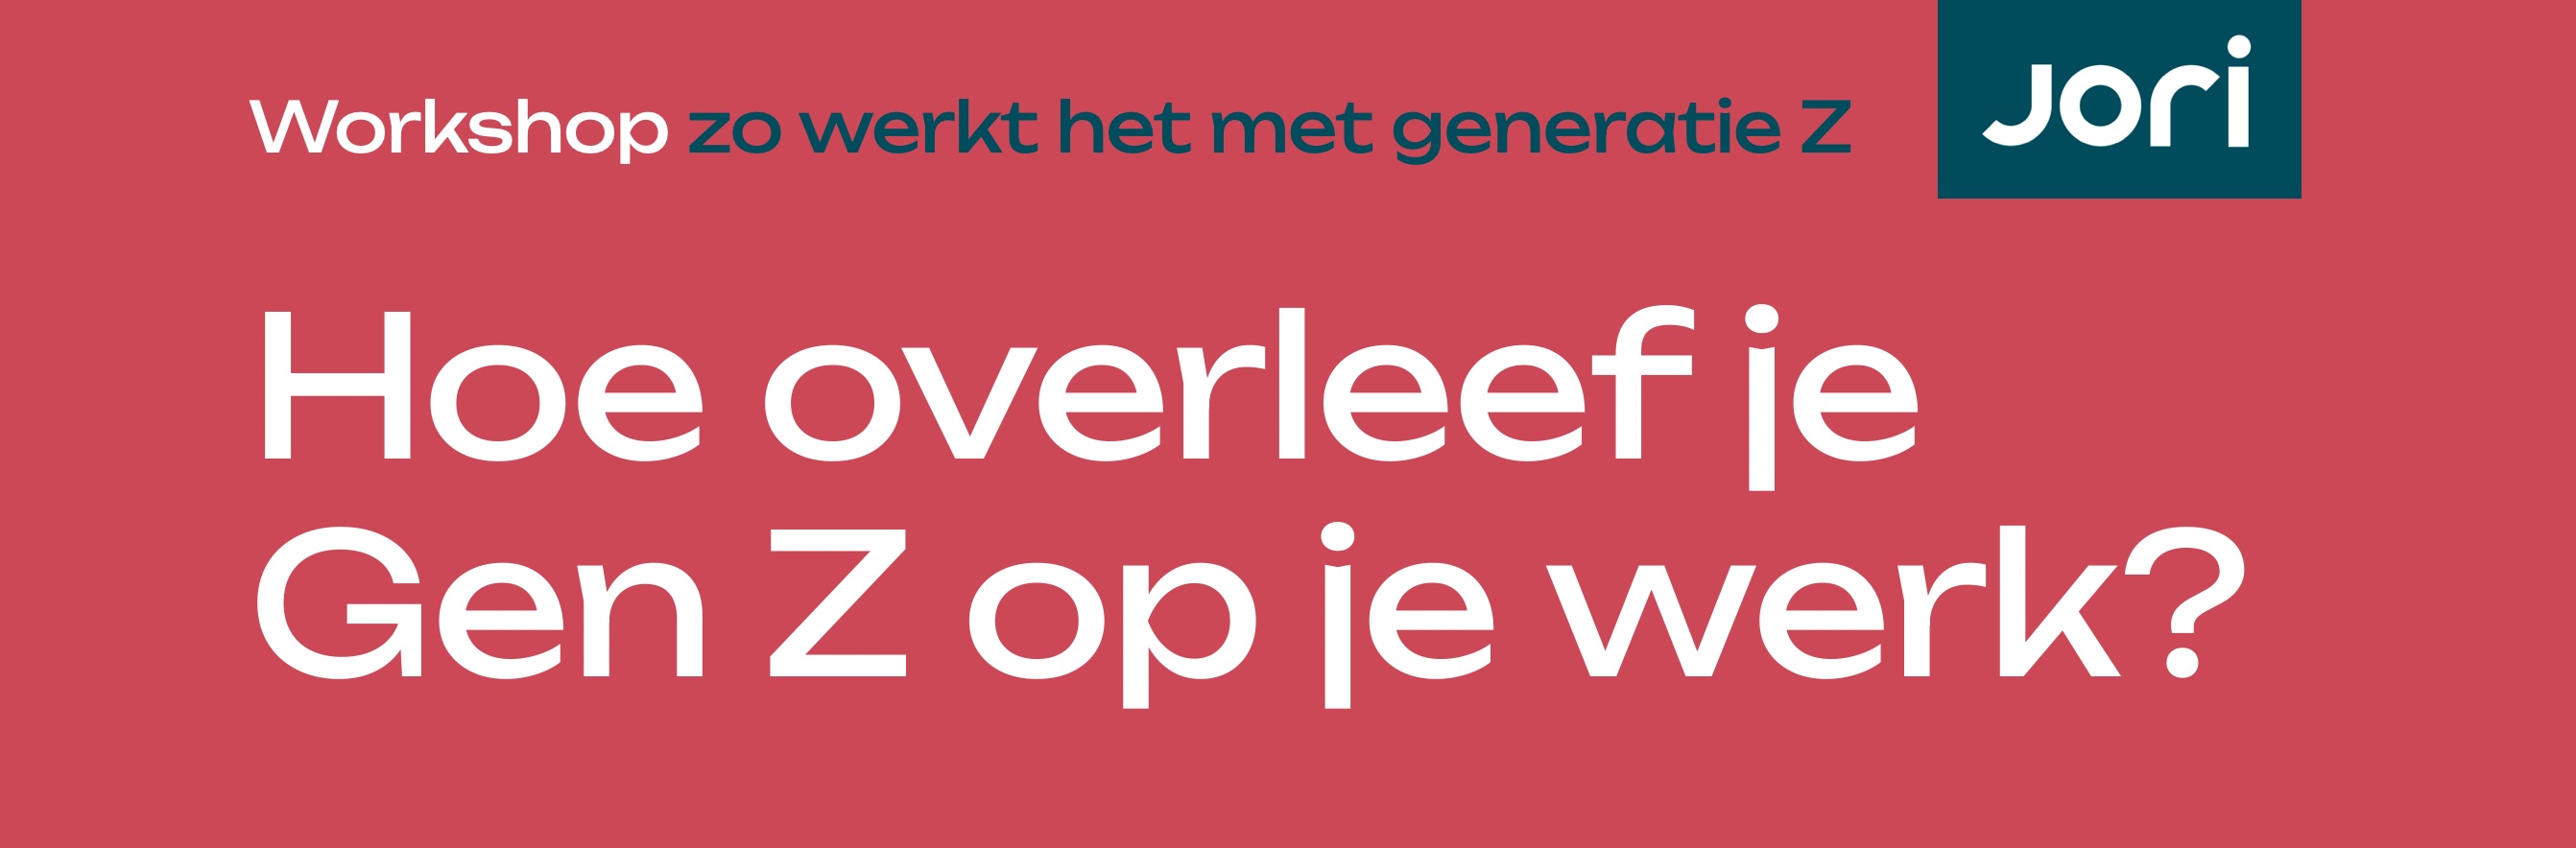 https://www.jori.nl/assets/training-workshop-generatie-z-genz-burojori.jpg